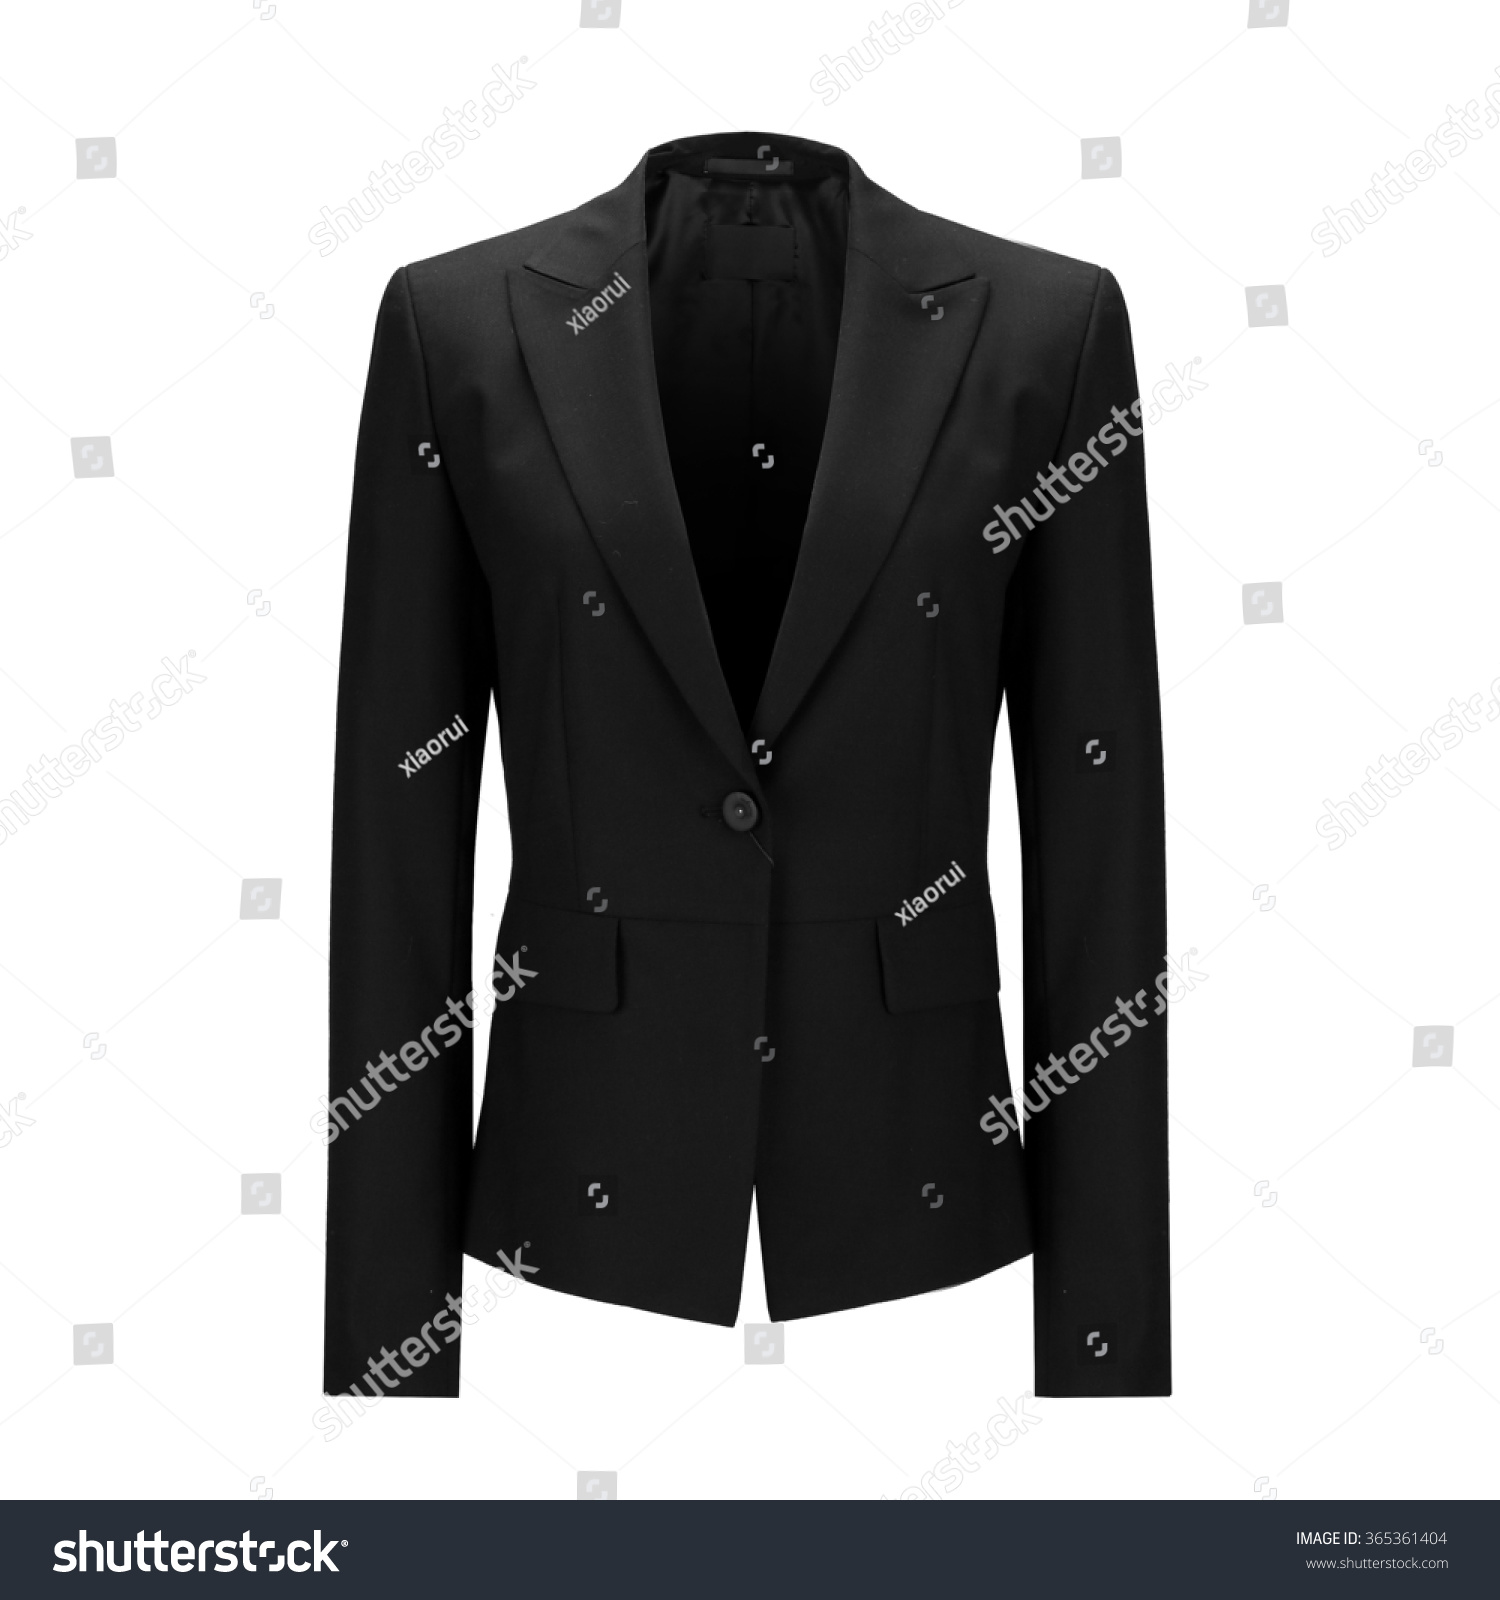 36,969 3d suit Stock Photos, Images & Photography | Shutterstock